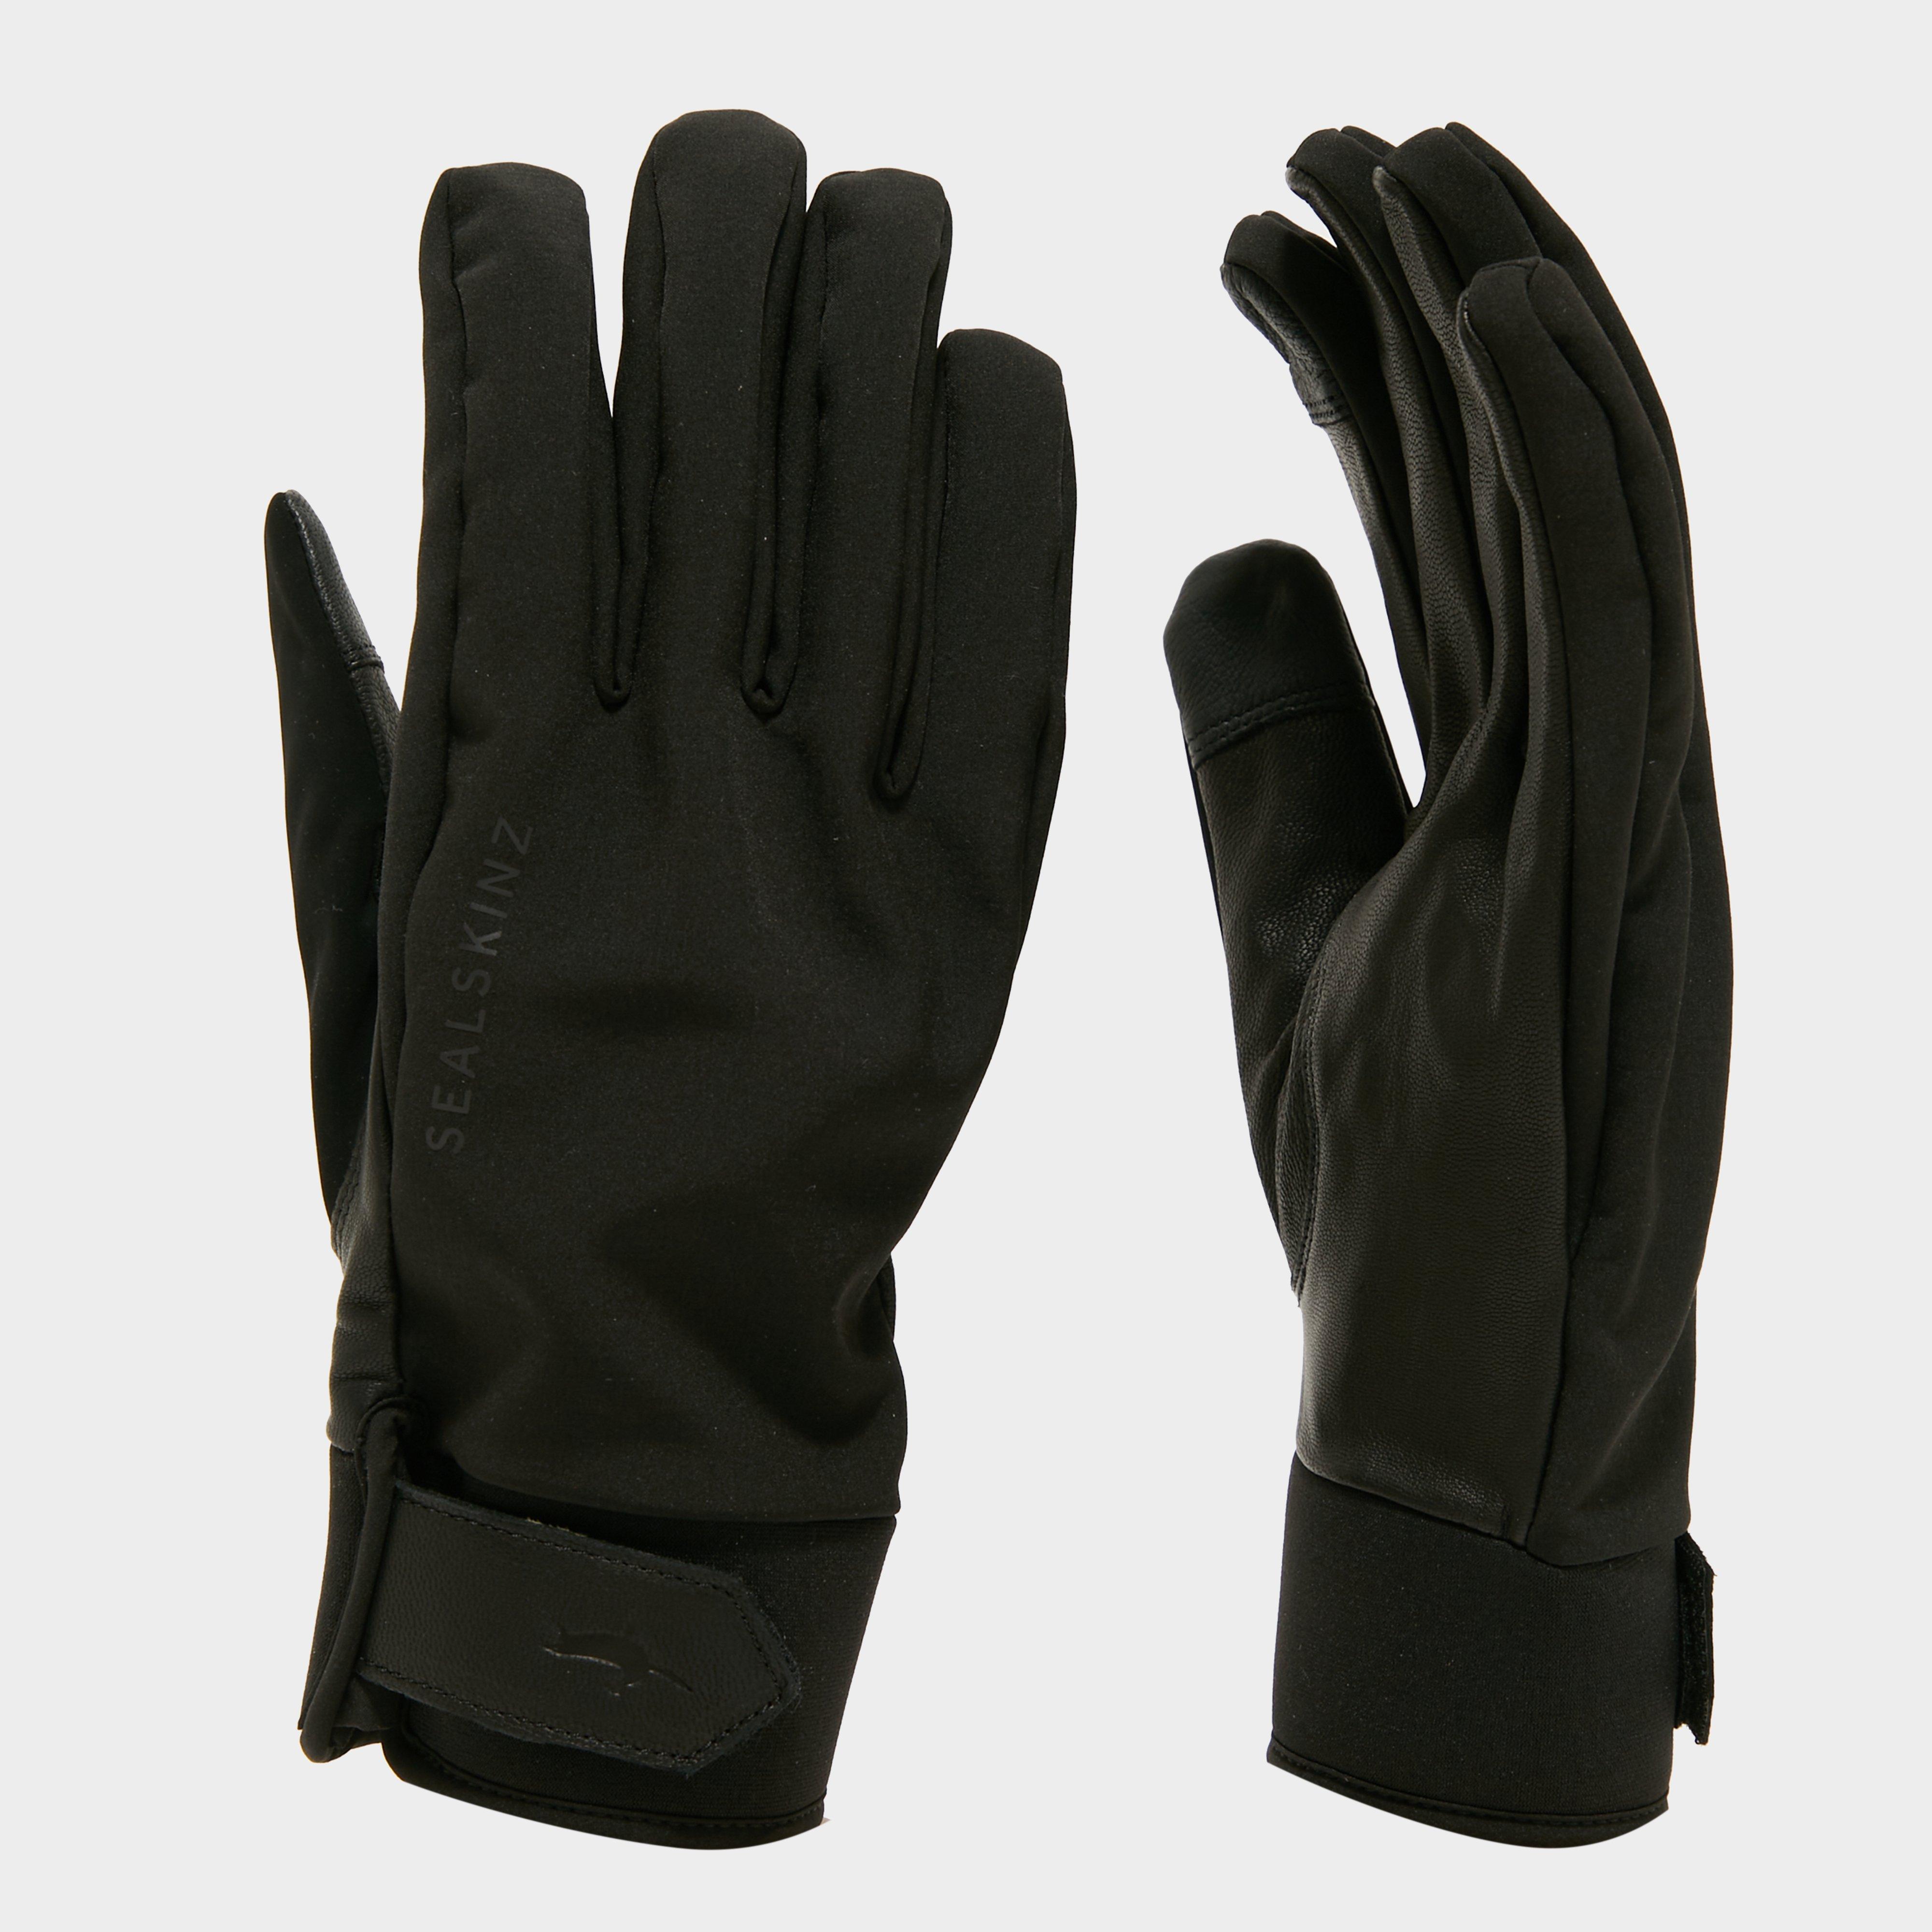 SealSkinz Sealskinz Mens Waterproof Insulated Gloves - Black, Black